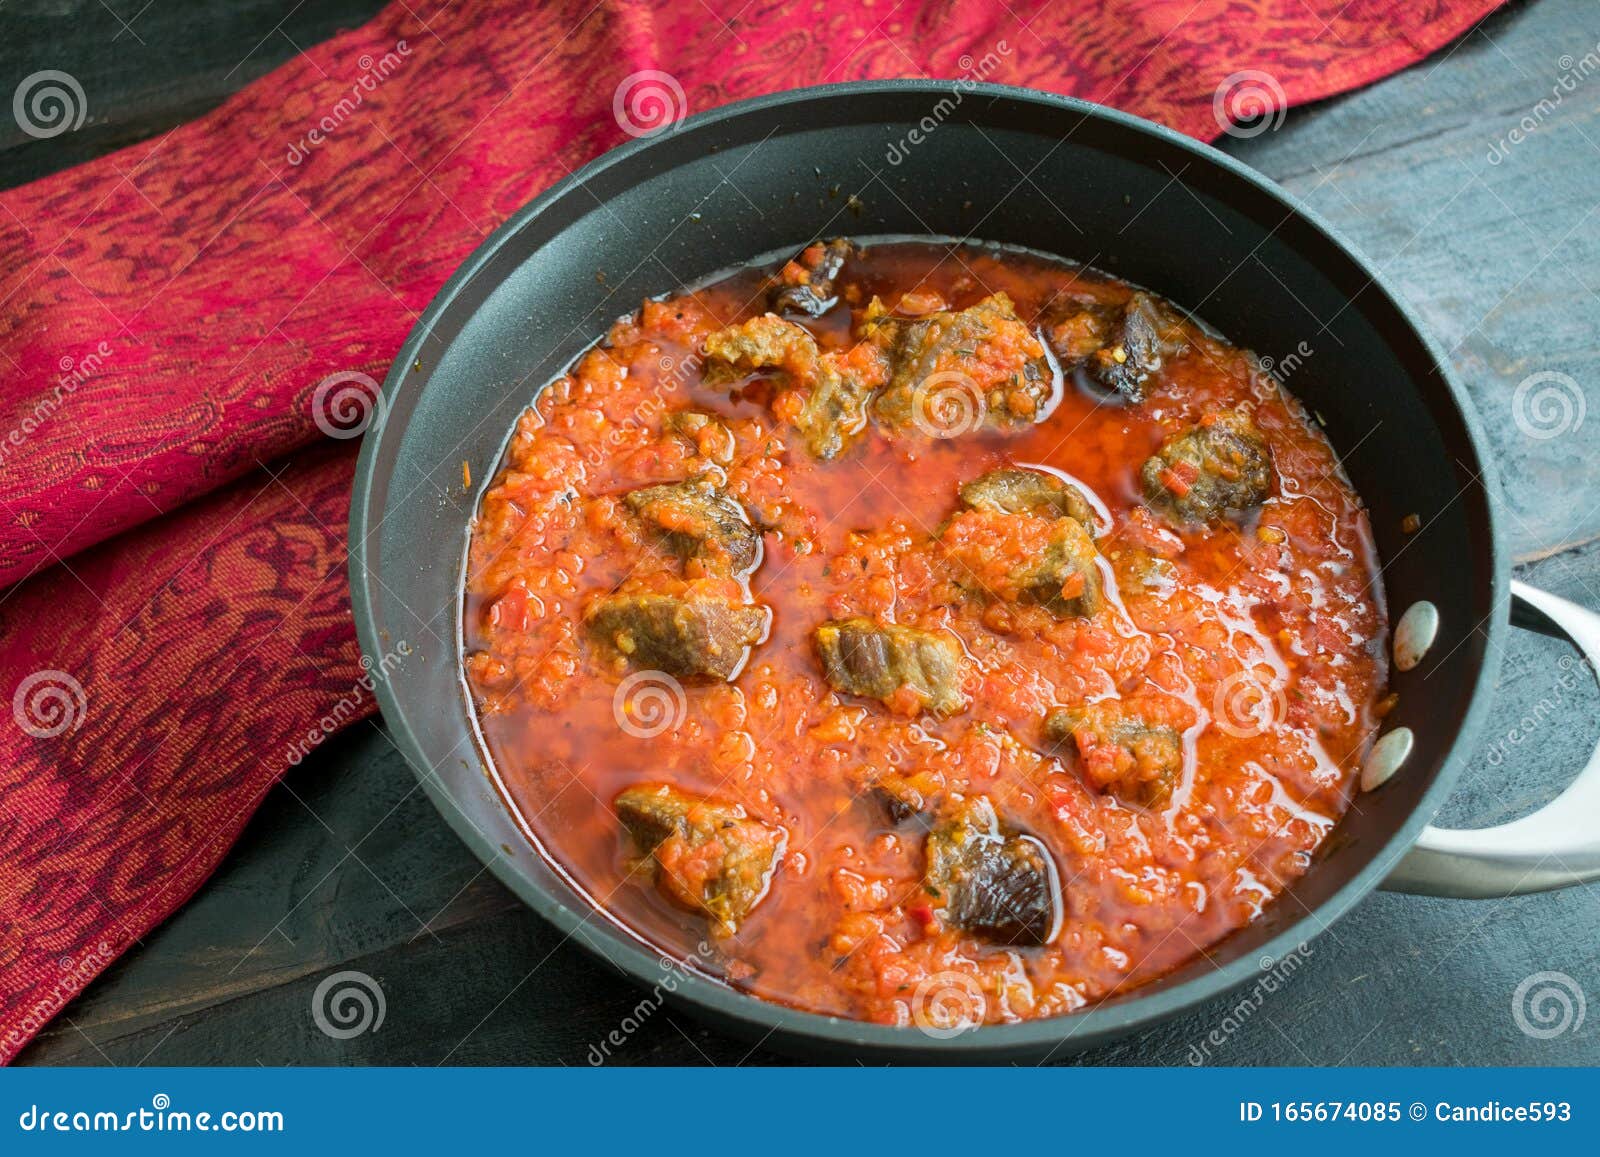 nigerian beef stew african stew in a saucepan